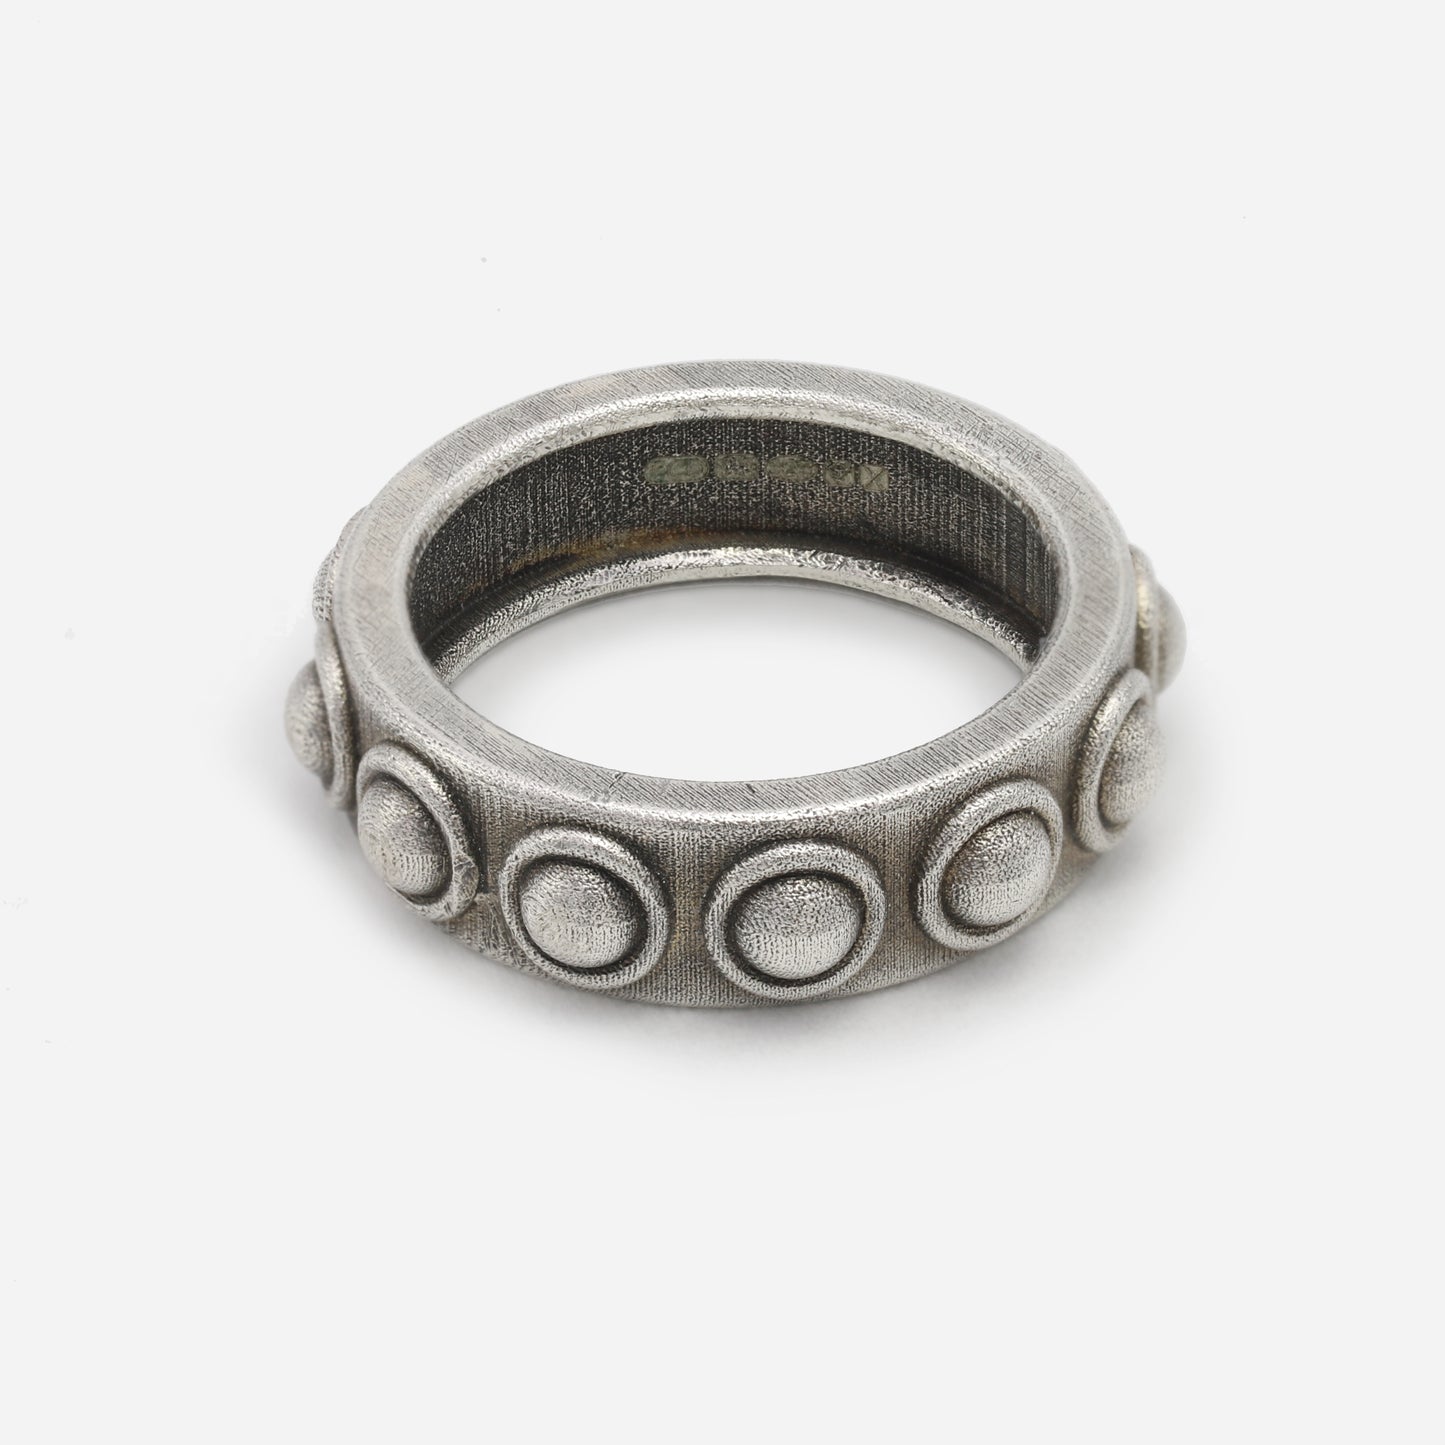 Titan Pantheon Ring in Oxidized Silver